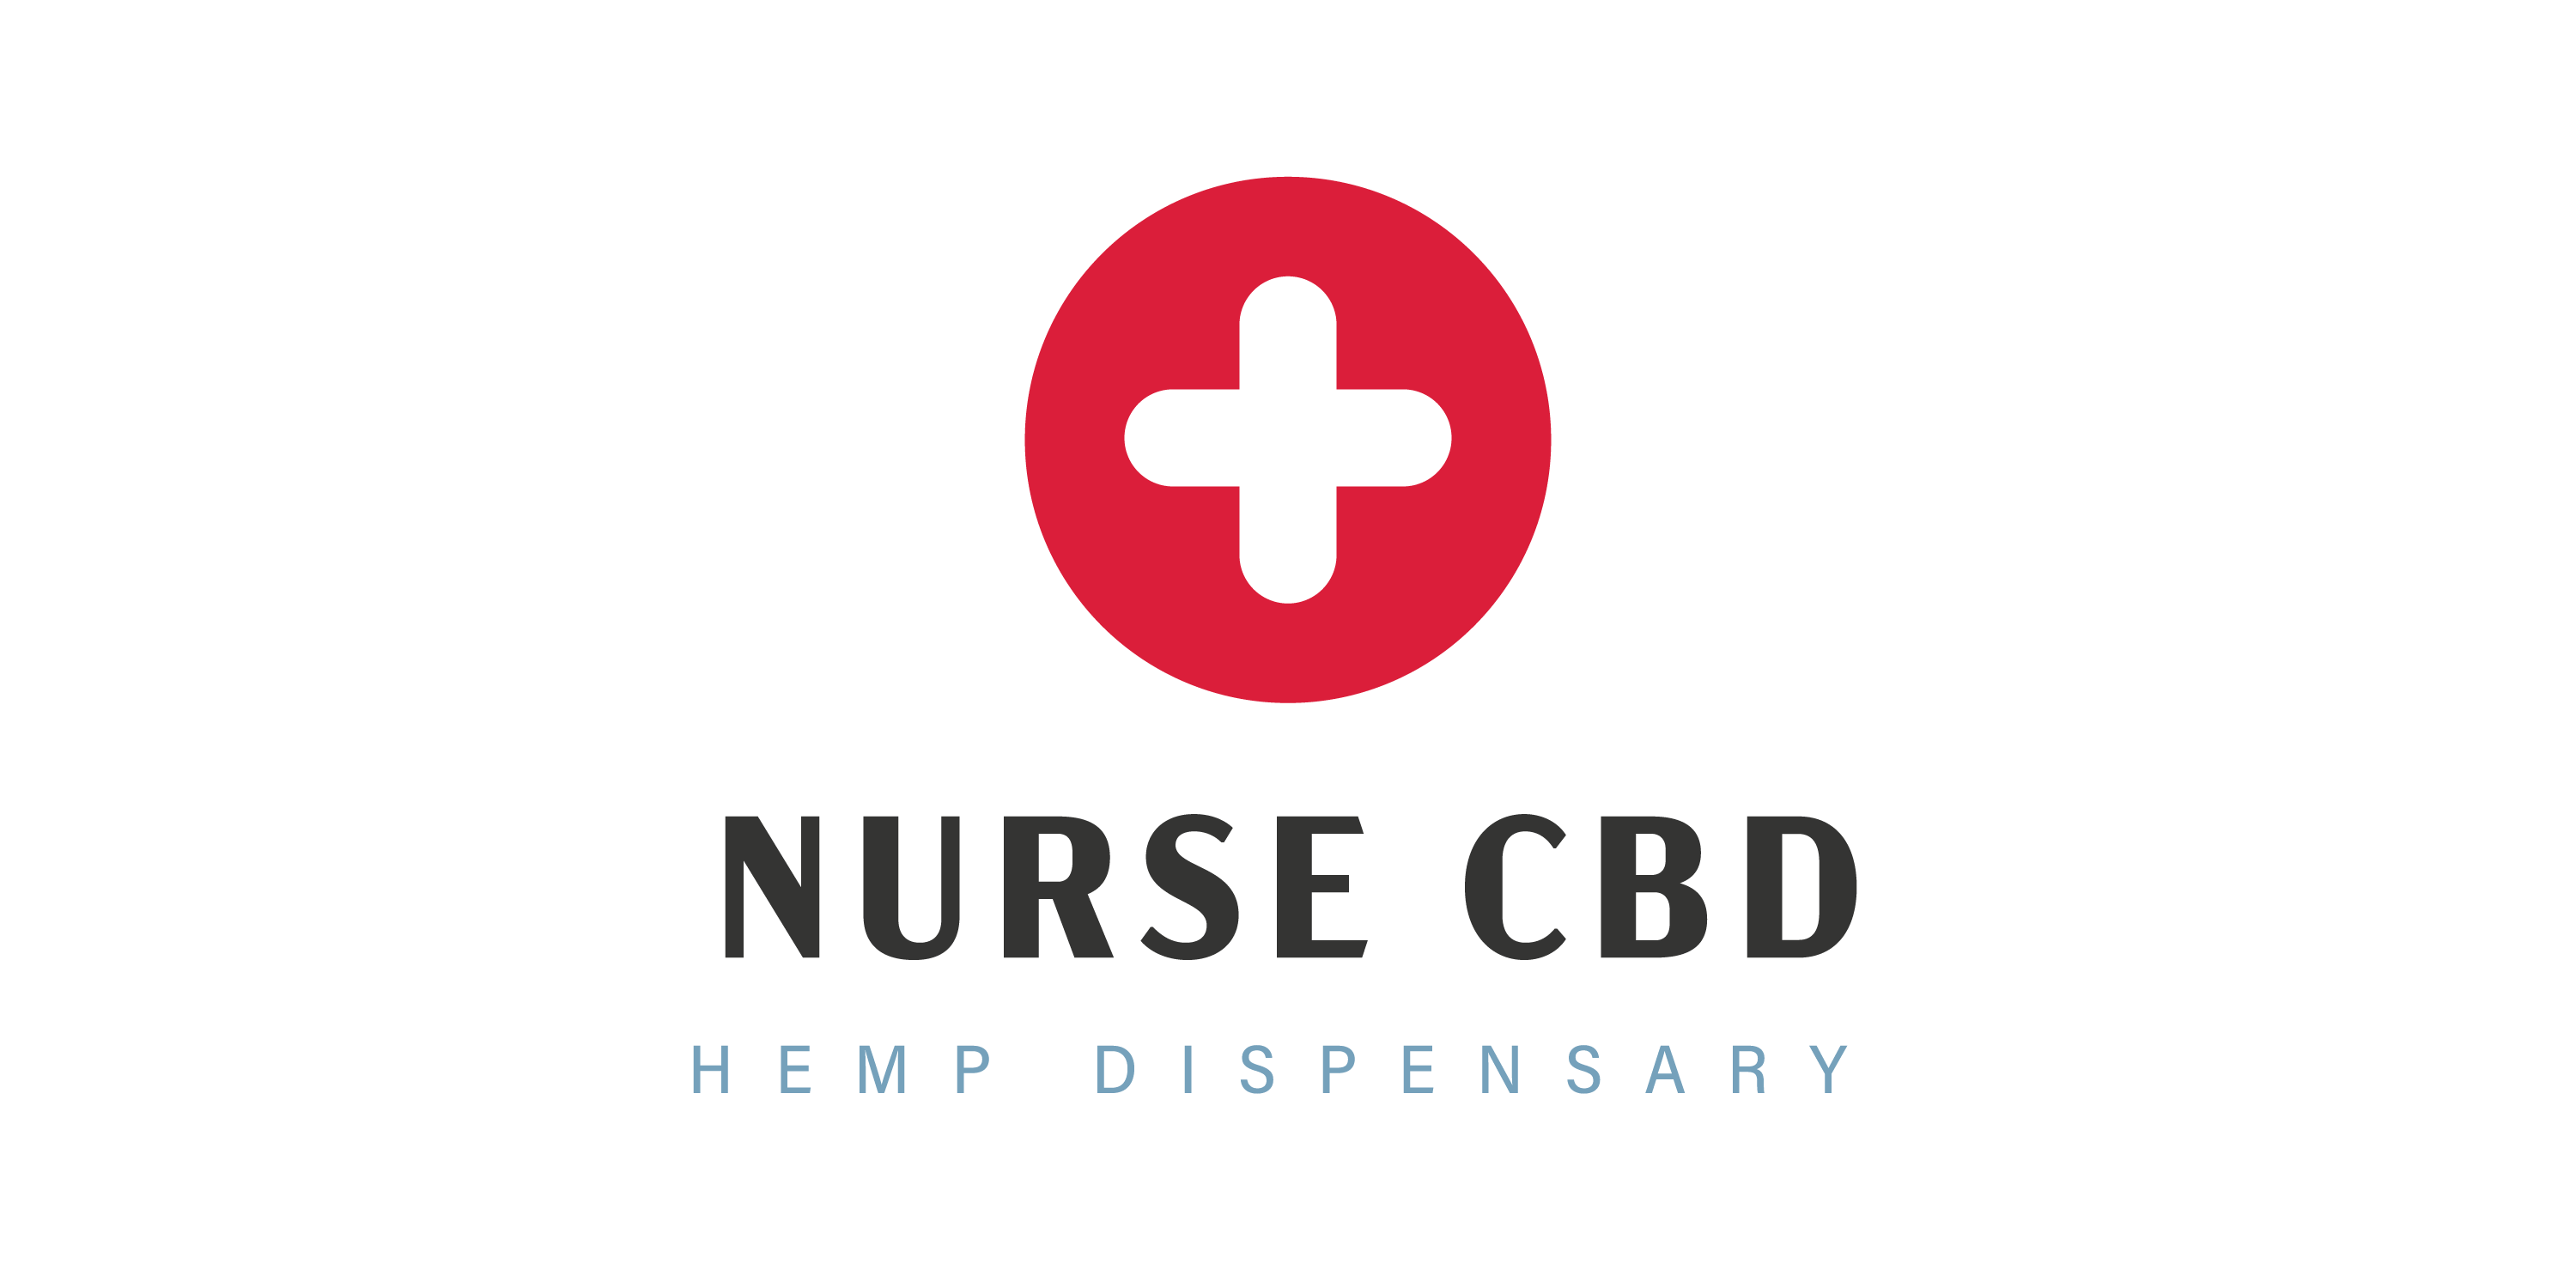 Nurse wellness cbd and hemp dispensary cannabis products online